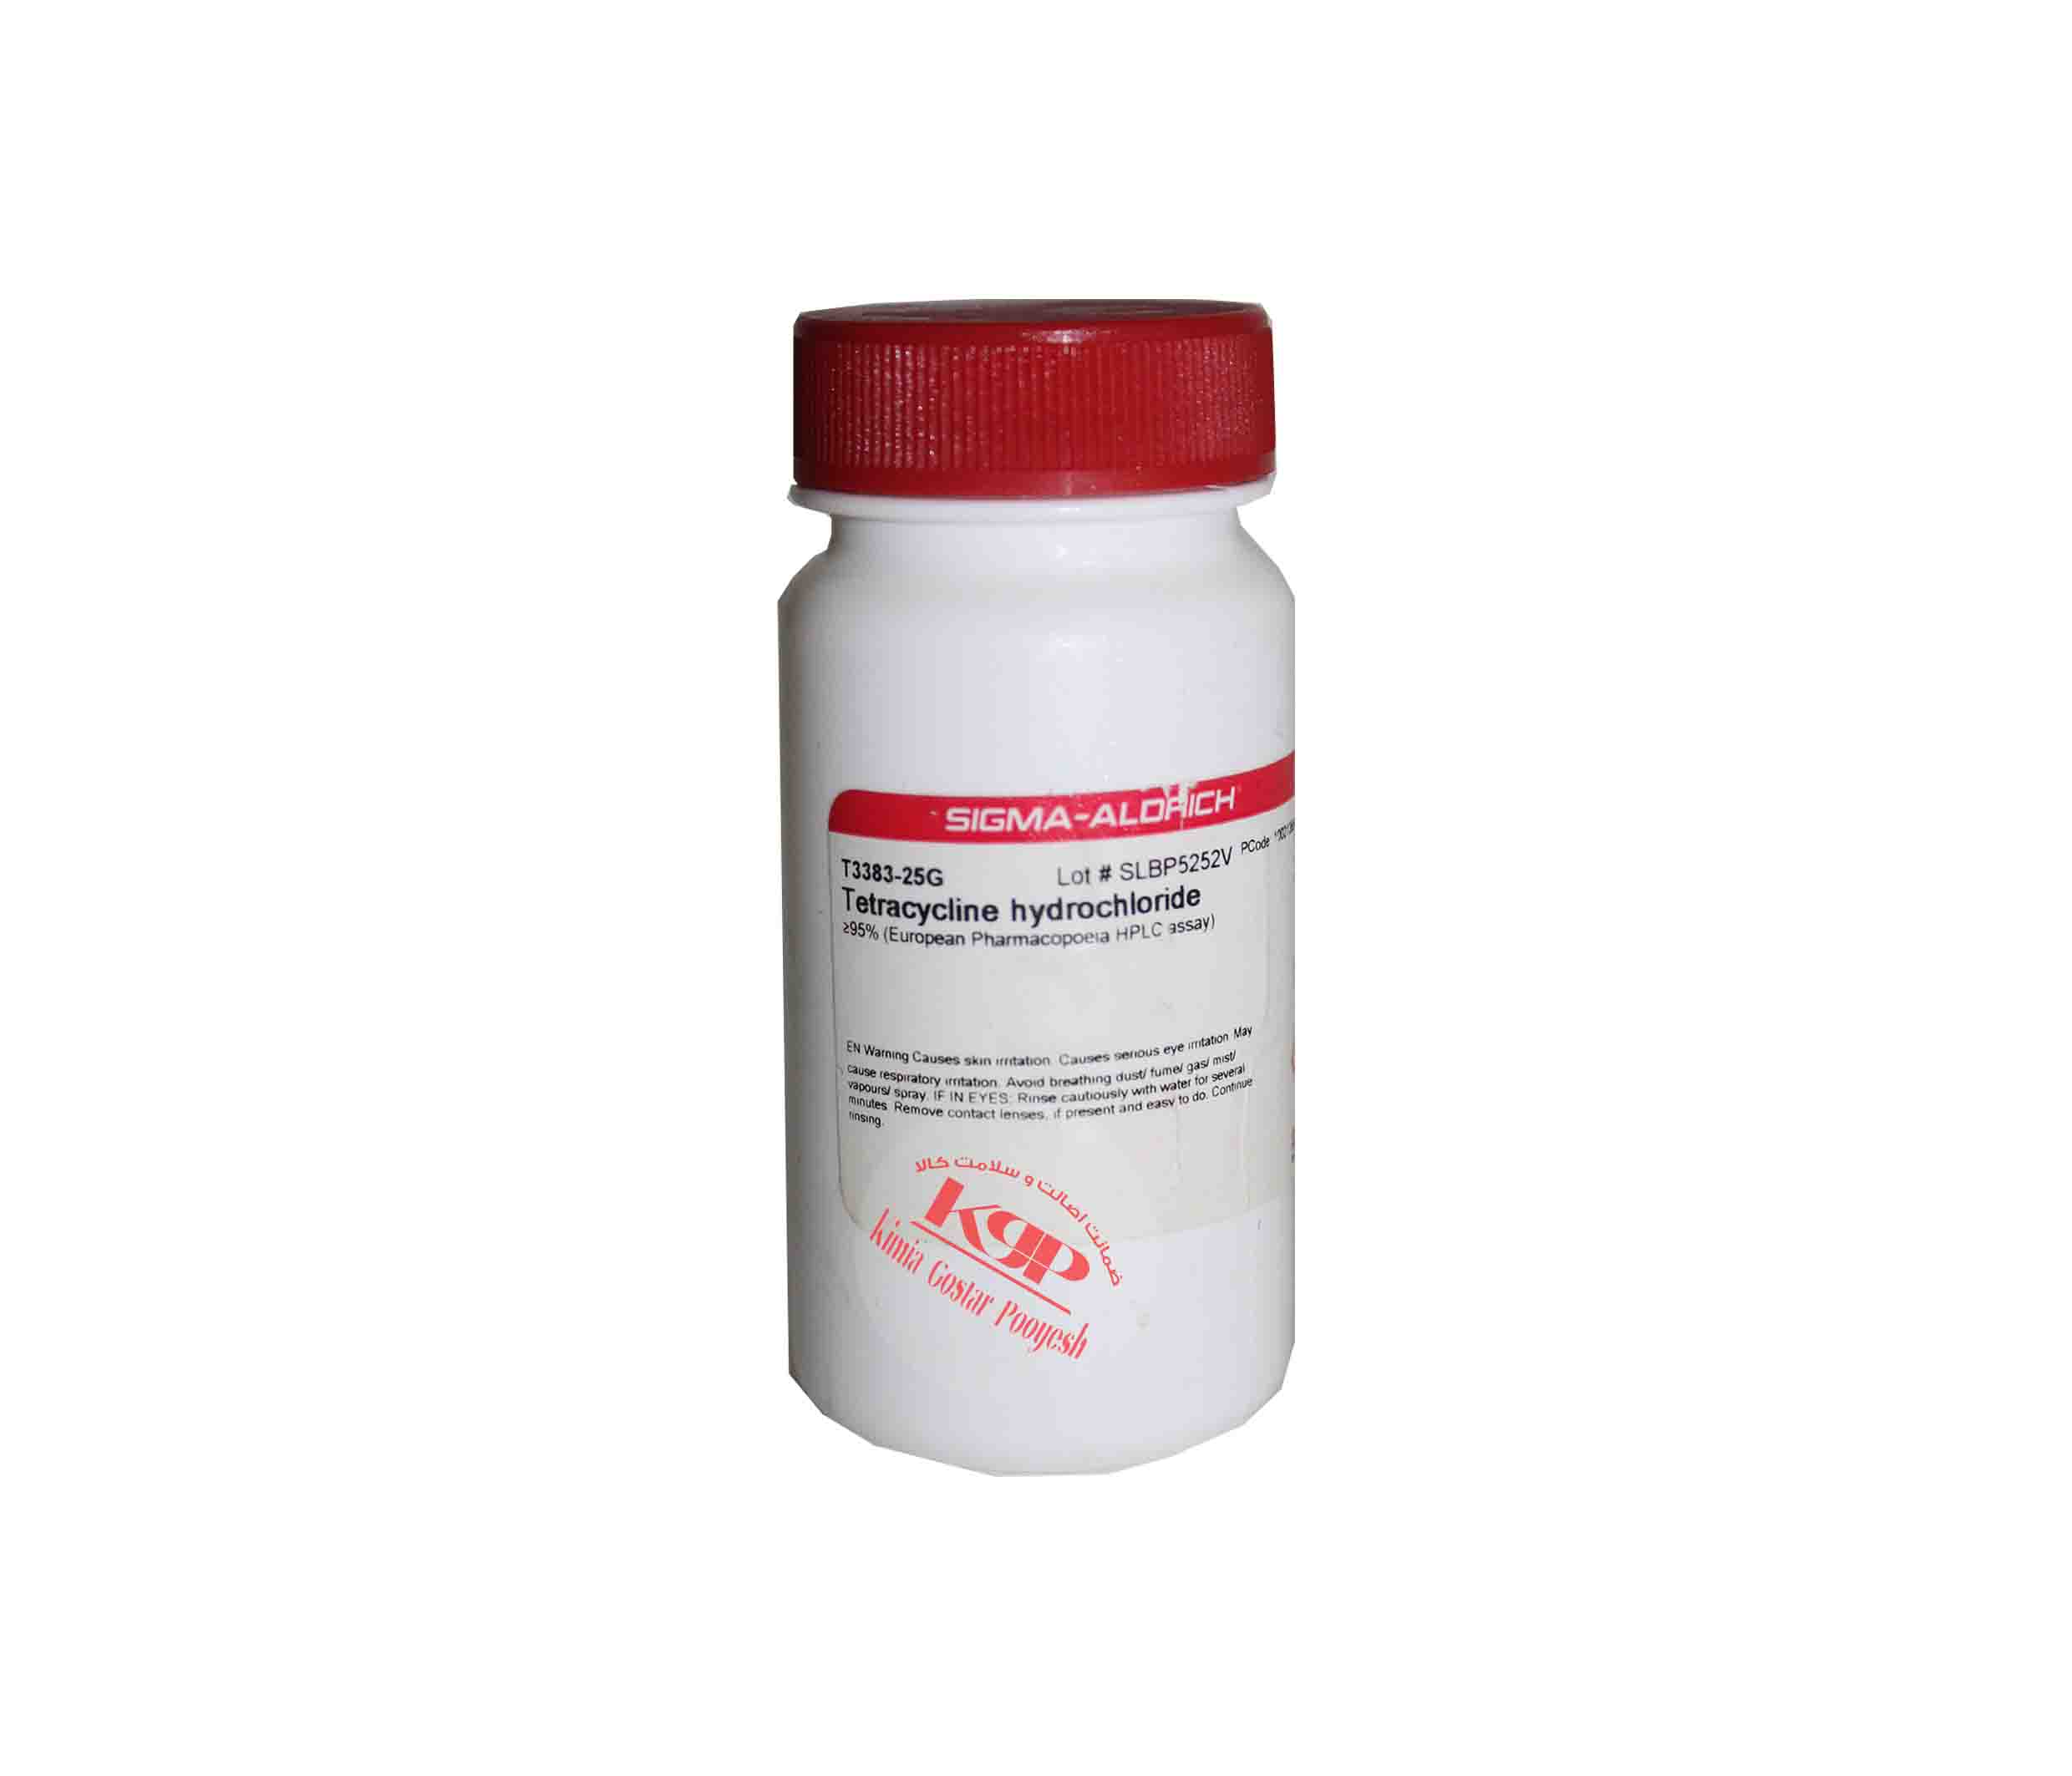 Tetracycline hydrochloride (European Pharmacopoeia HPLC assay)